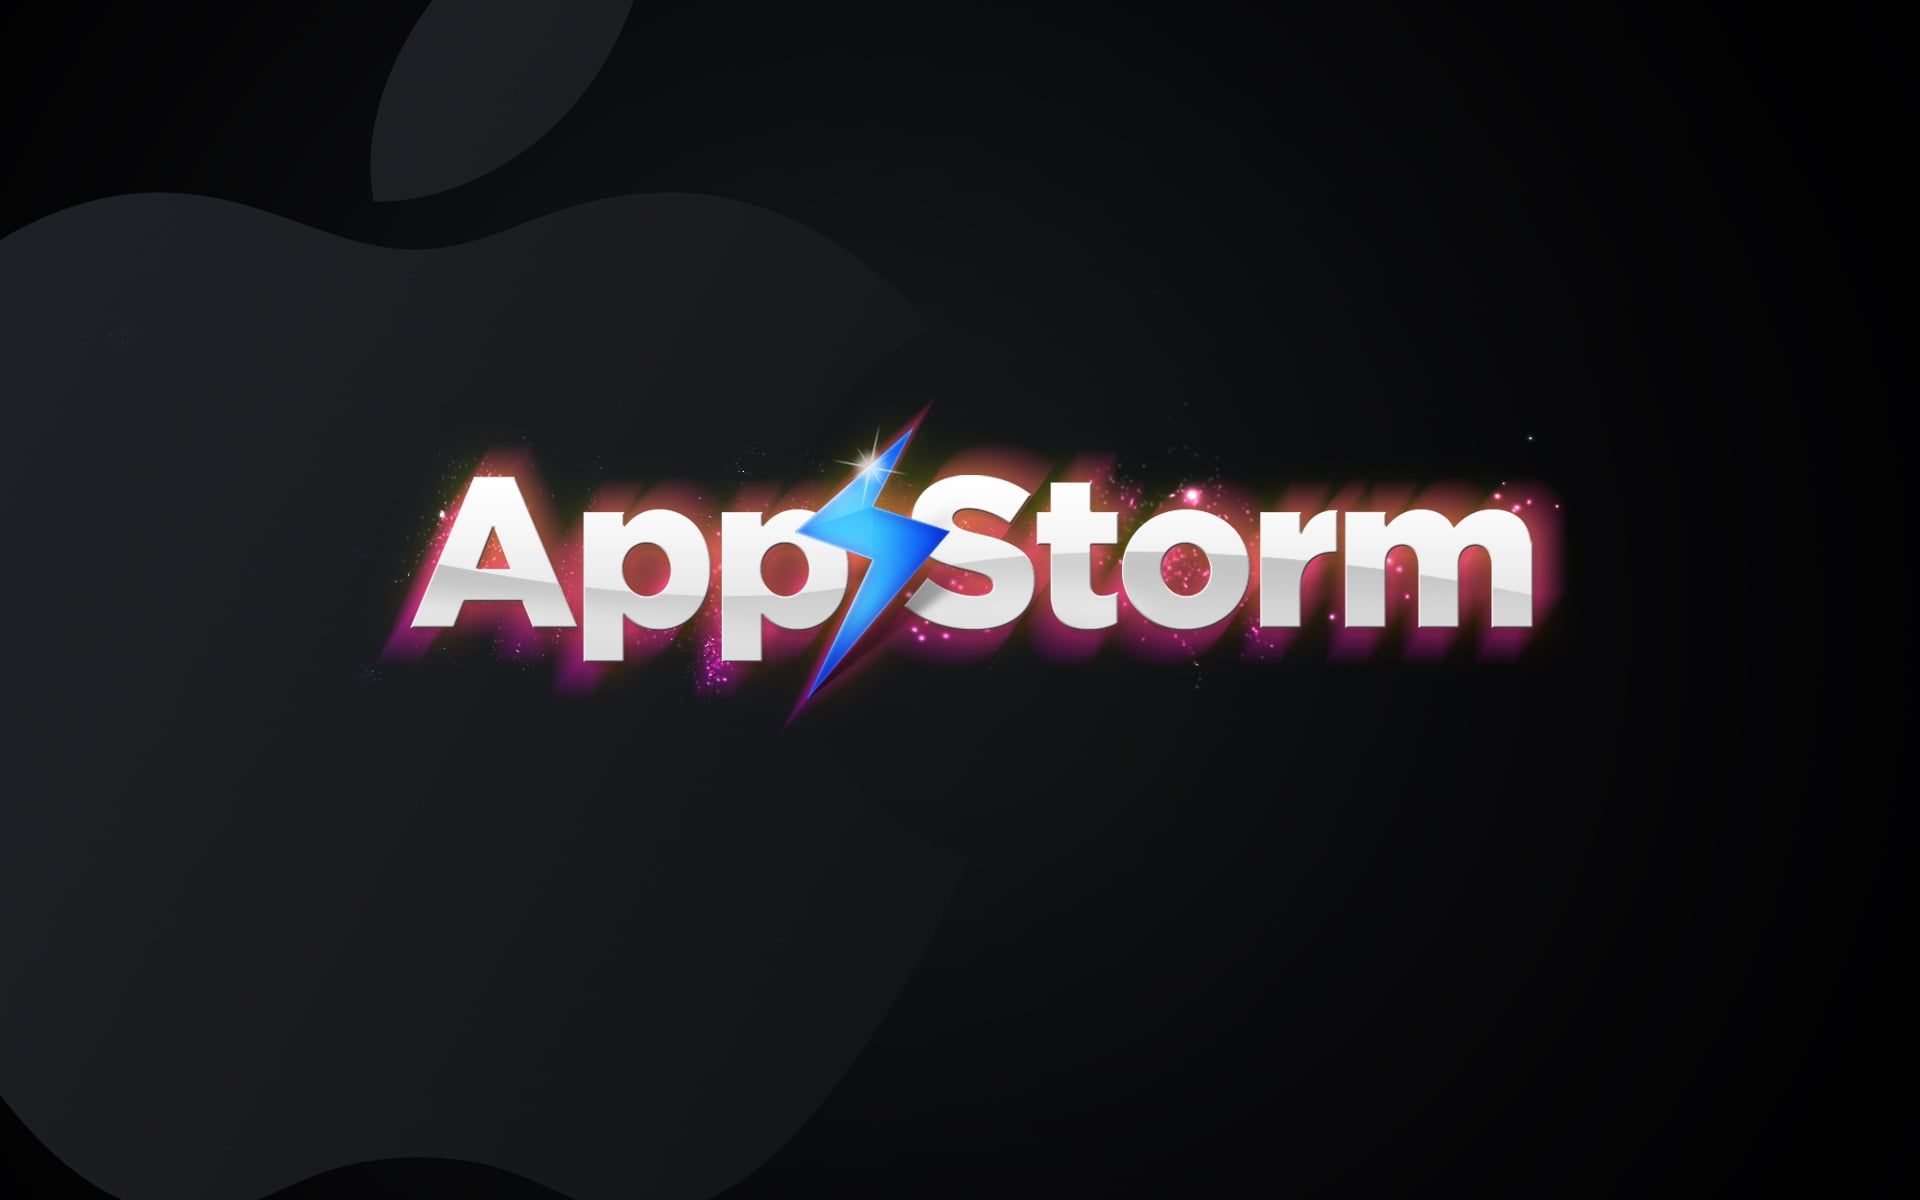 App Storm graphic wallpaper